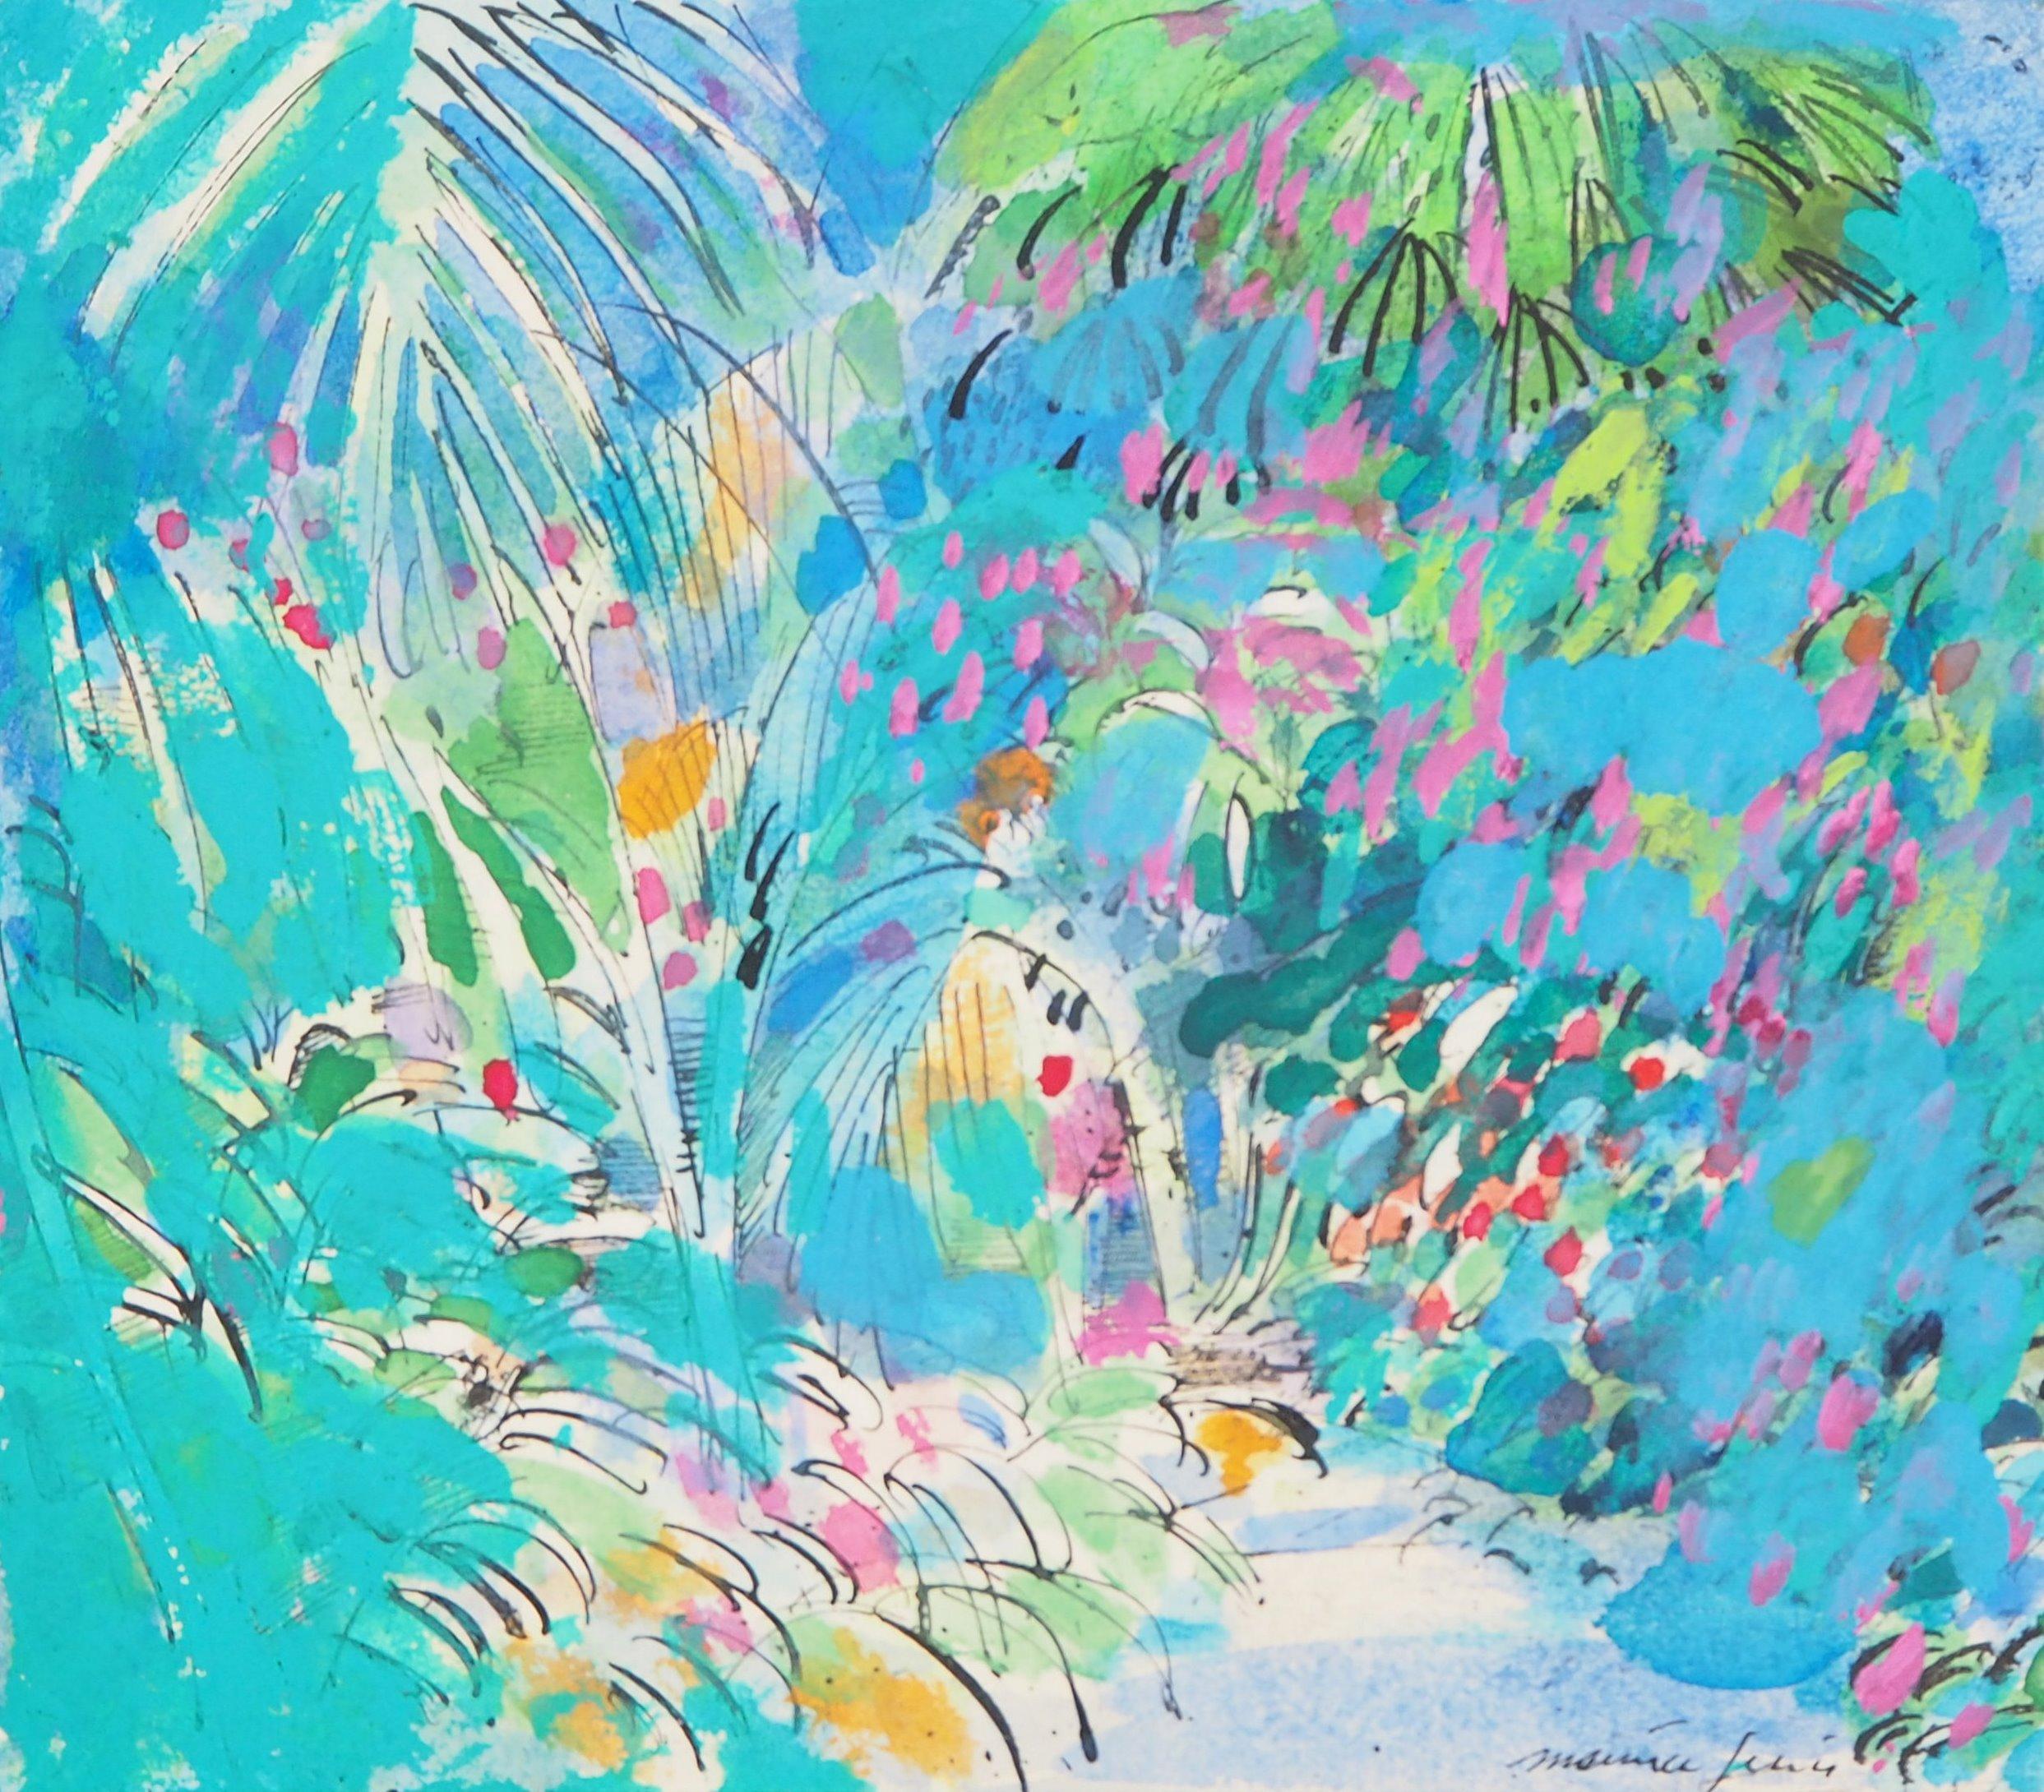 Impressionist Tropical Scenery - Original Handsigned Painting